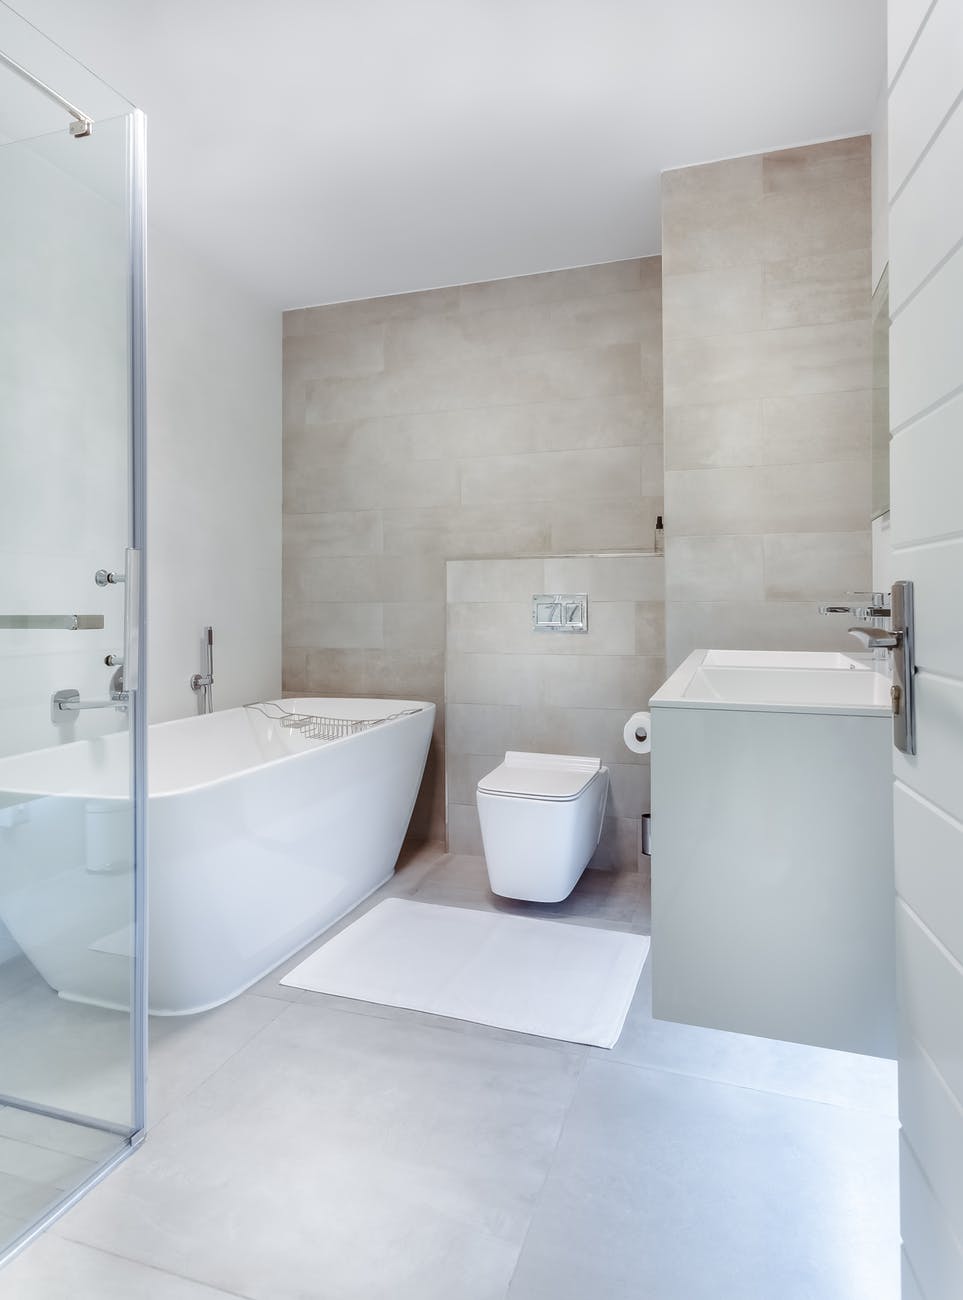 Fresh Design Ideas for Your Small Bathroom